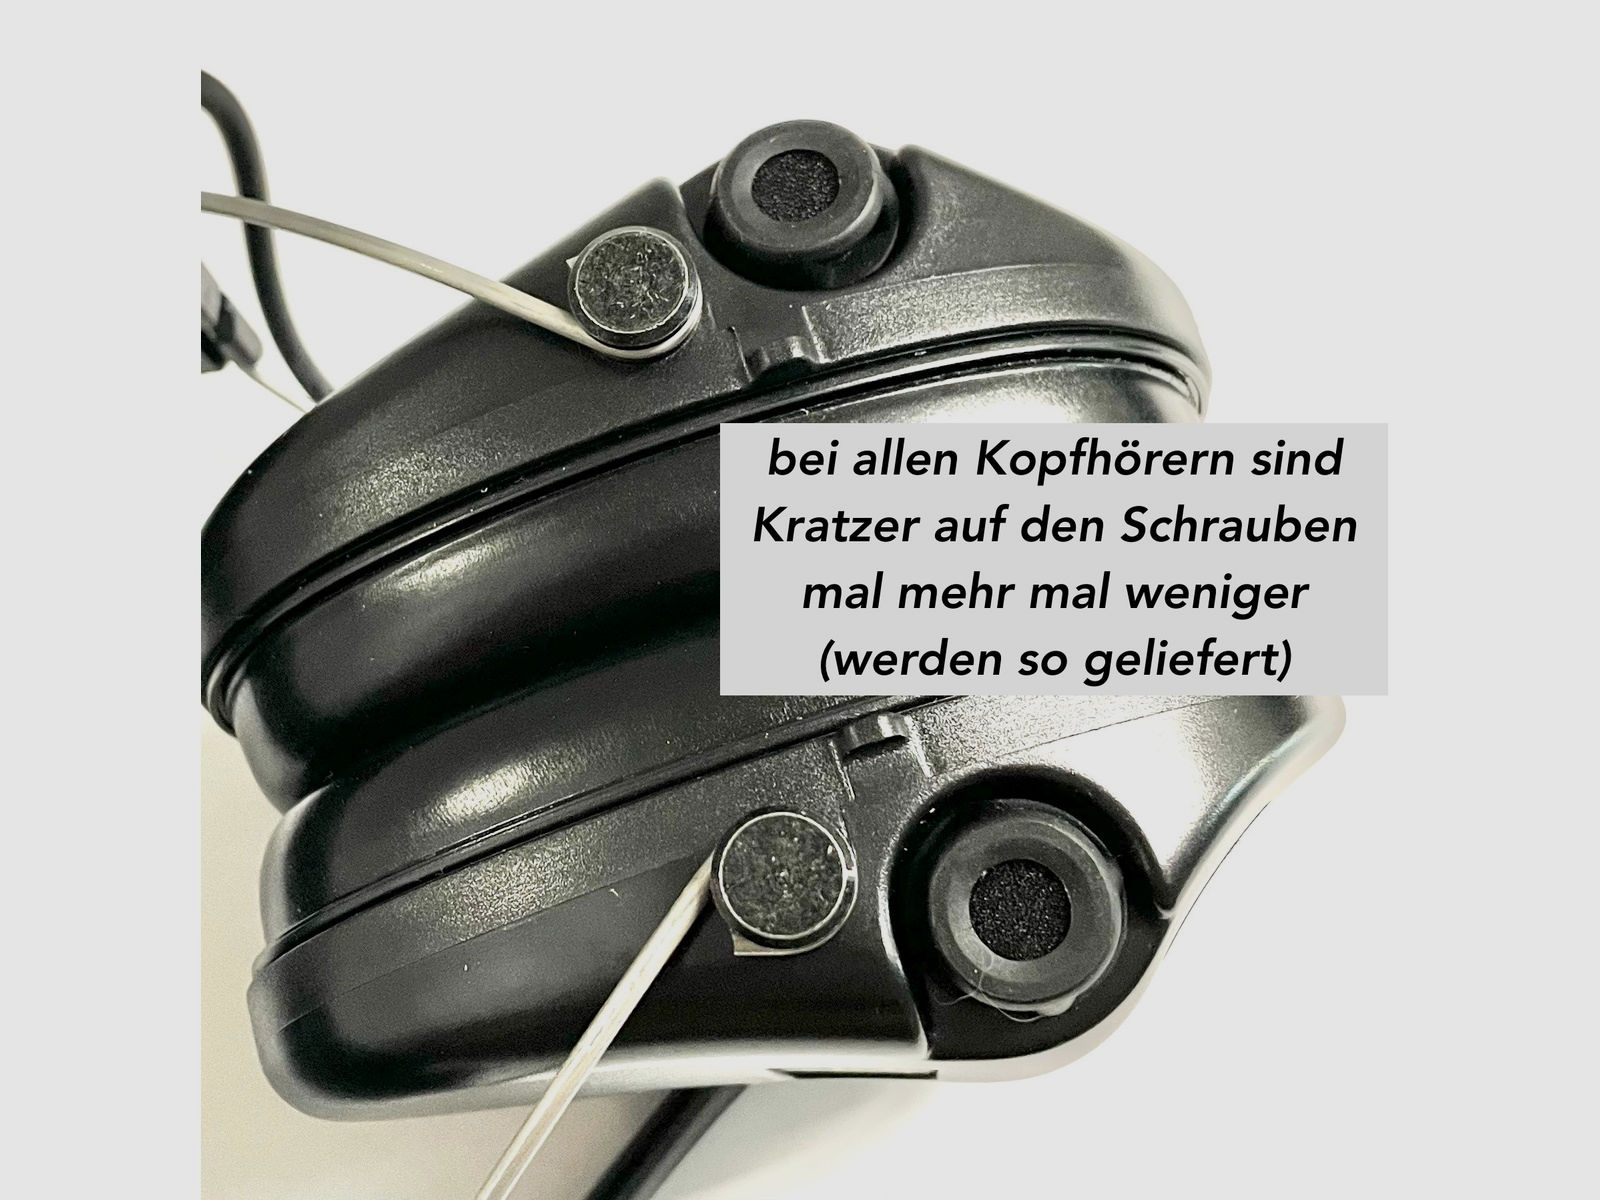 Sordin 75302-X-13-S Elektronischer Gehörschutz Supreme Schwarz Pro X LED Headband